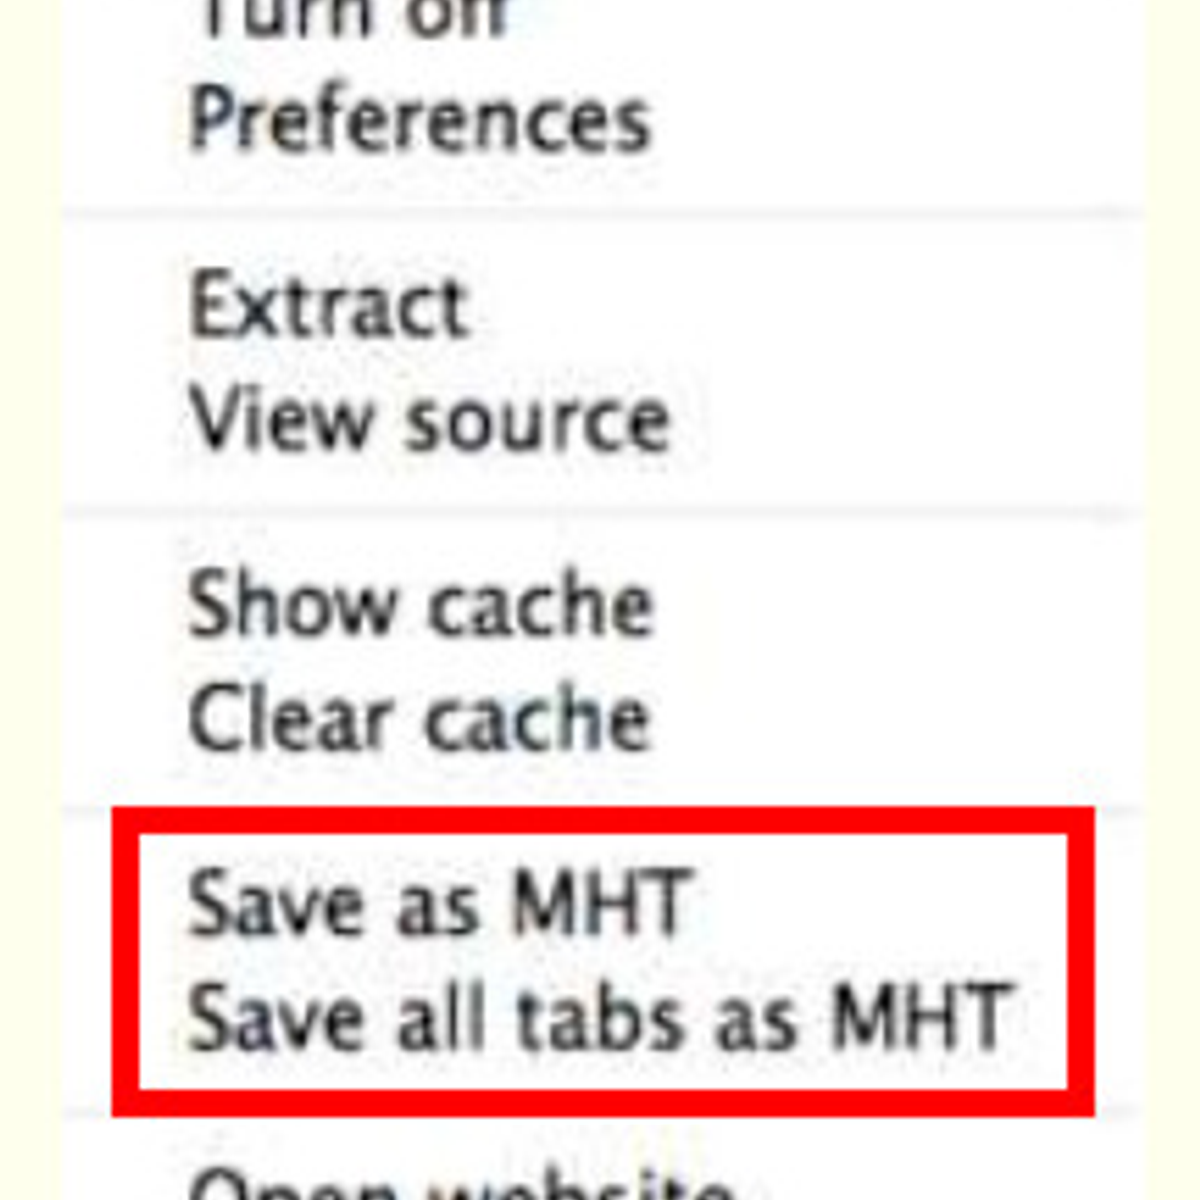 Mht to html mac mht to html for mac